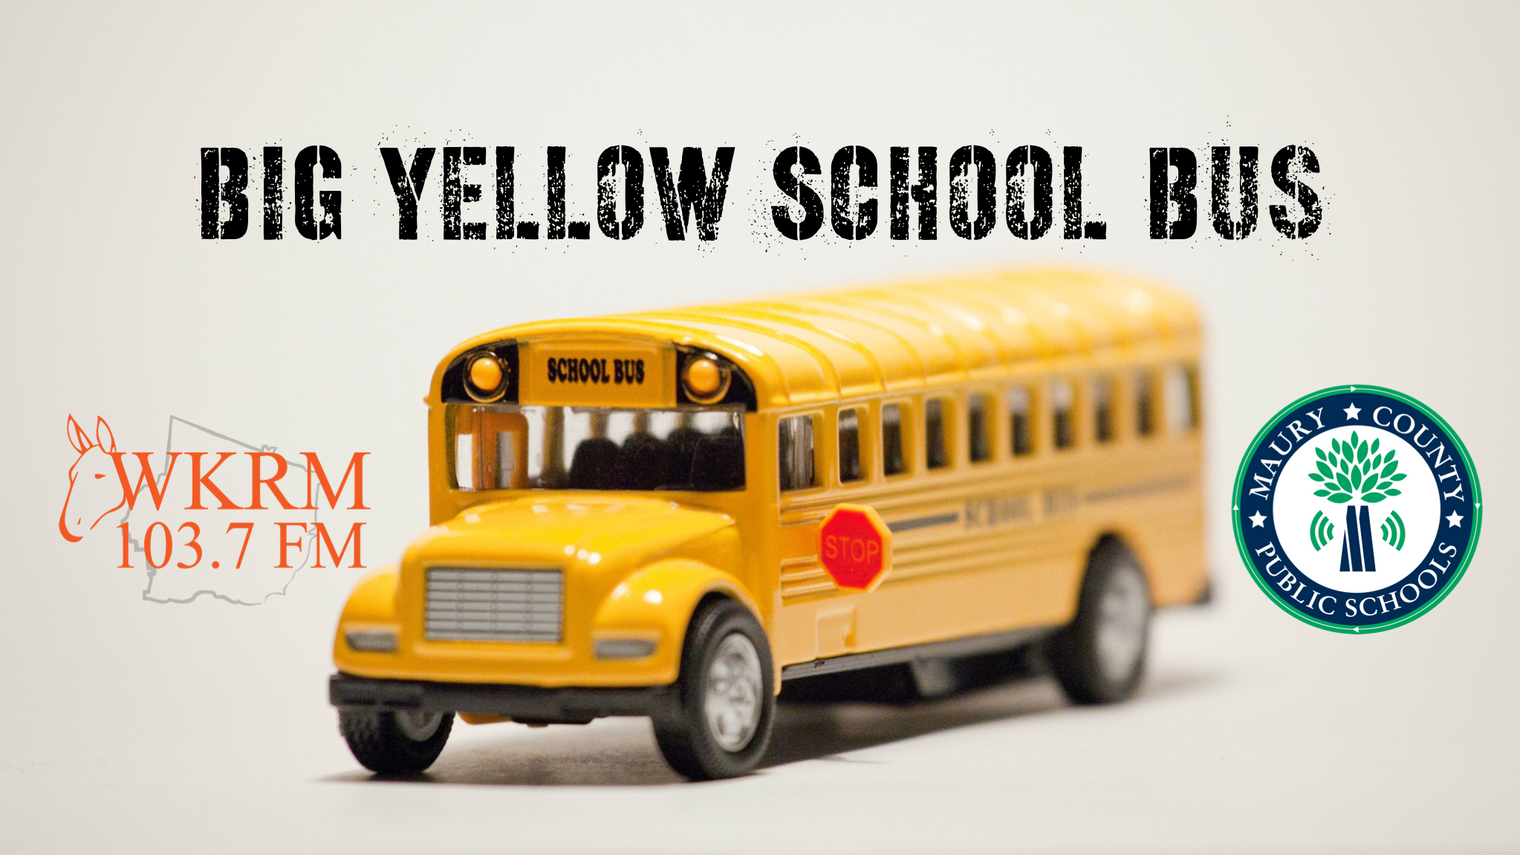 The Big Yellow School Bus